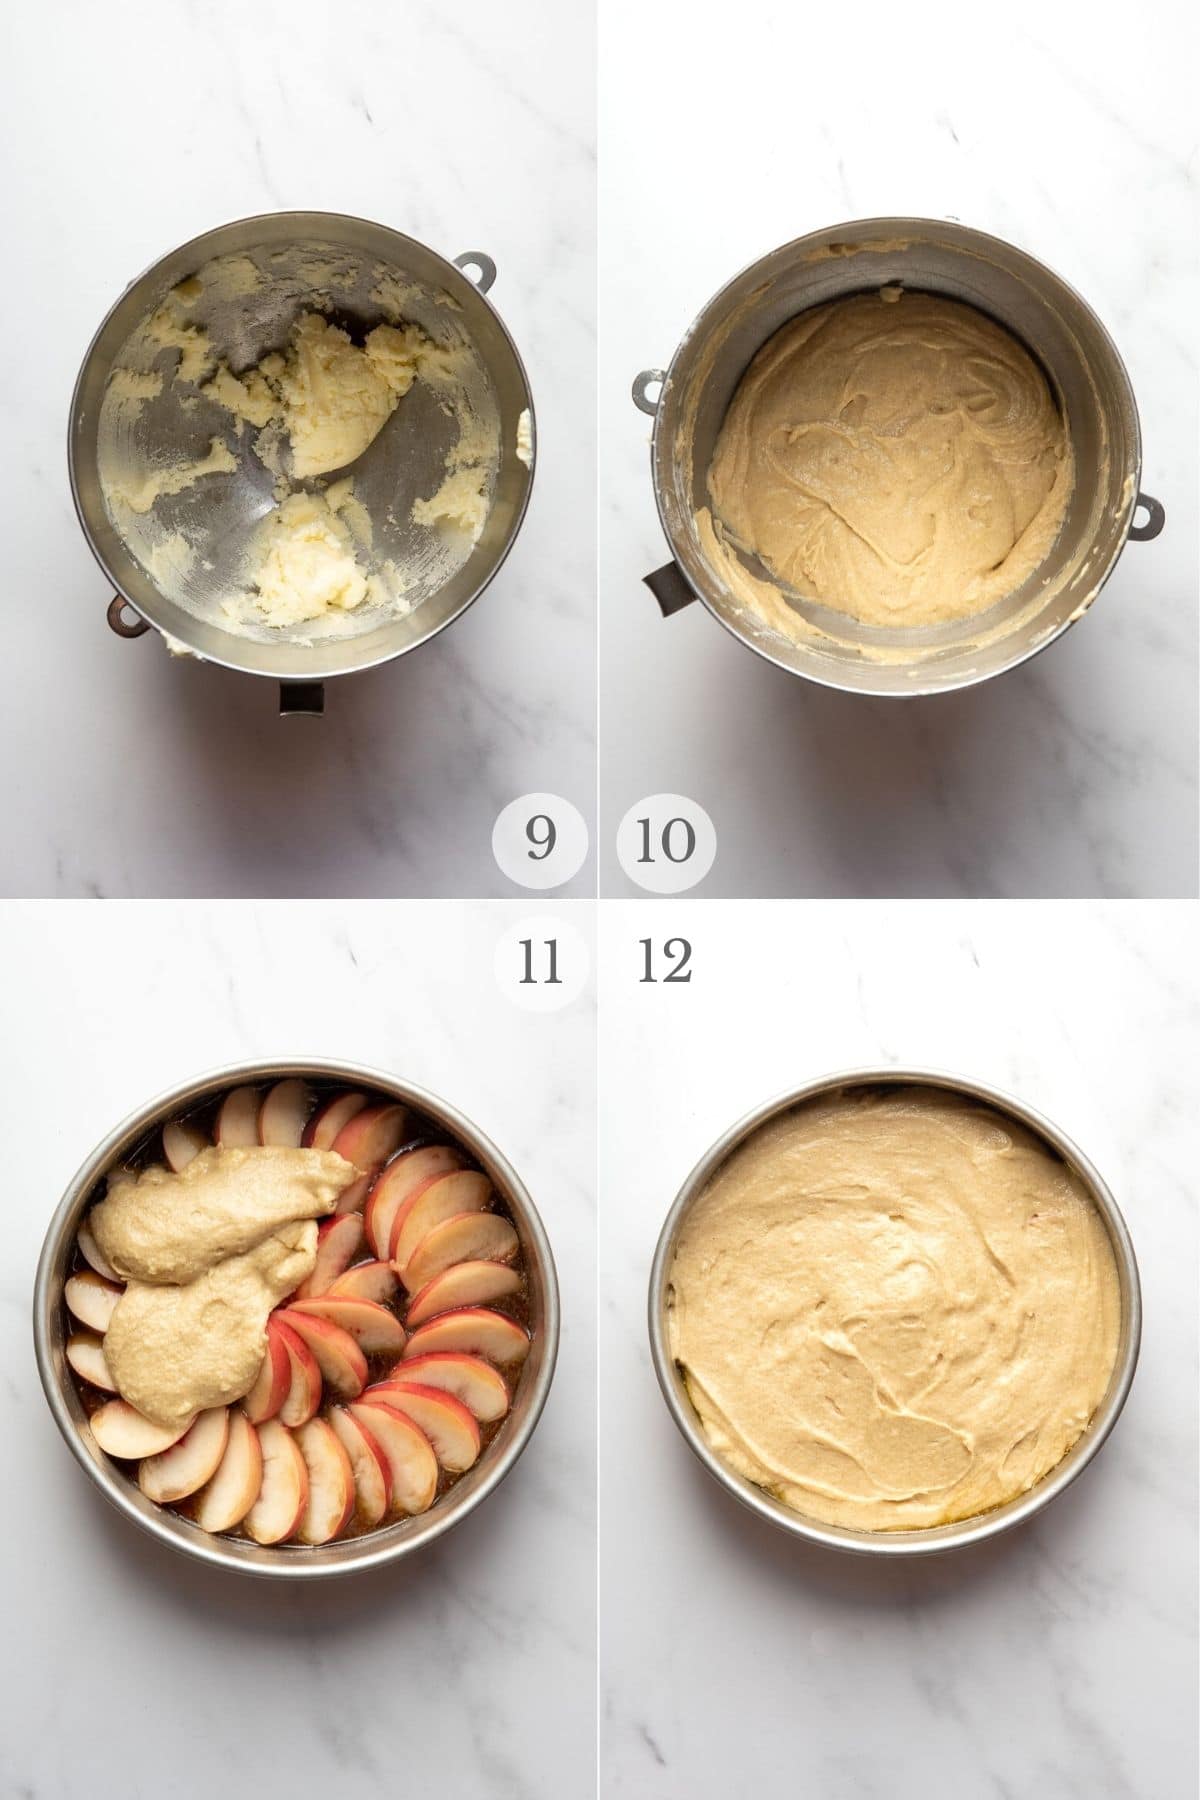 peach upside down cake recipe steps 9-12